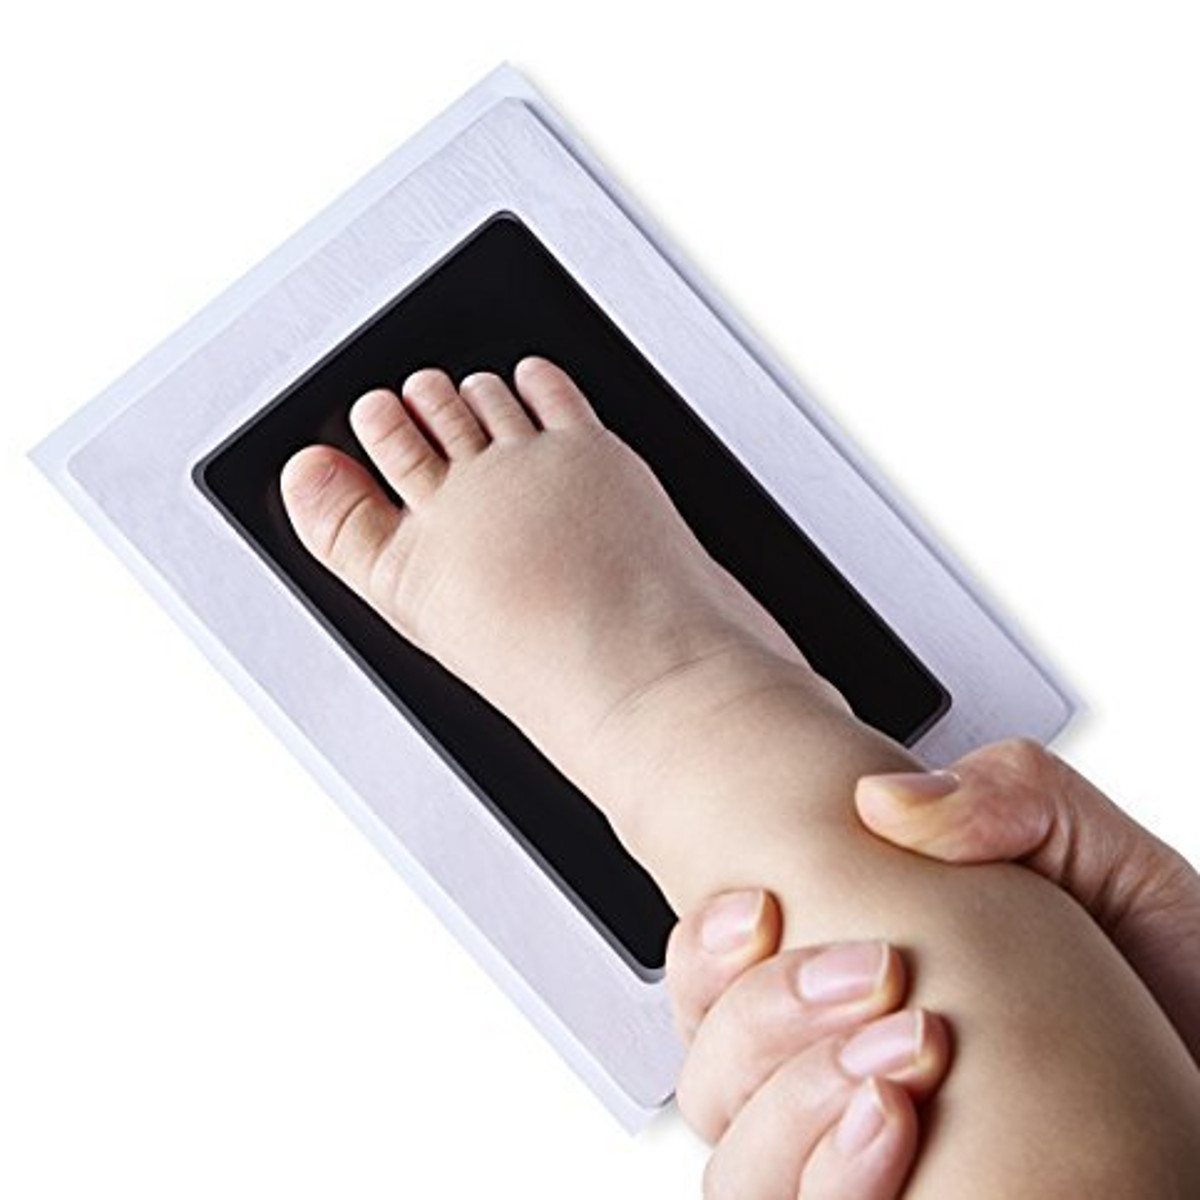 DIY-Baby-Footprint-Handprint-Impression-Ink-Kit-Shadow-Photo-Frame-Keepsake-Baby-Shower-Safe-Gift-1317103